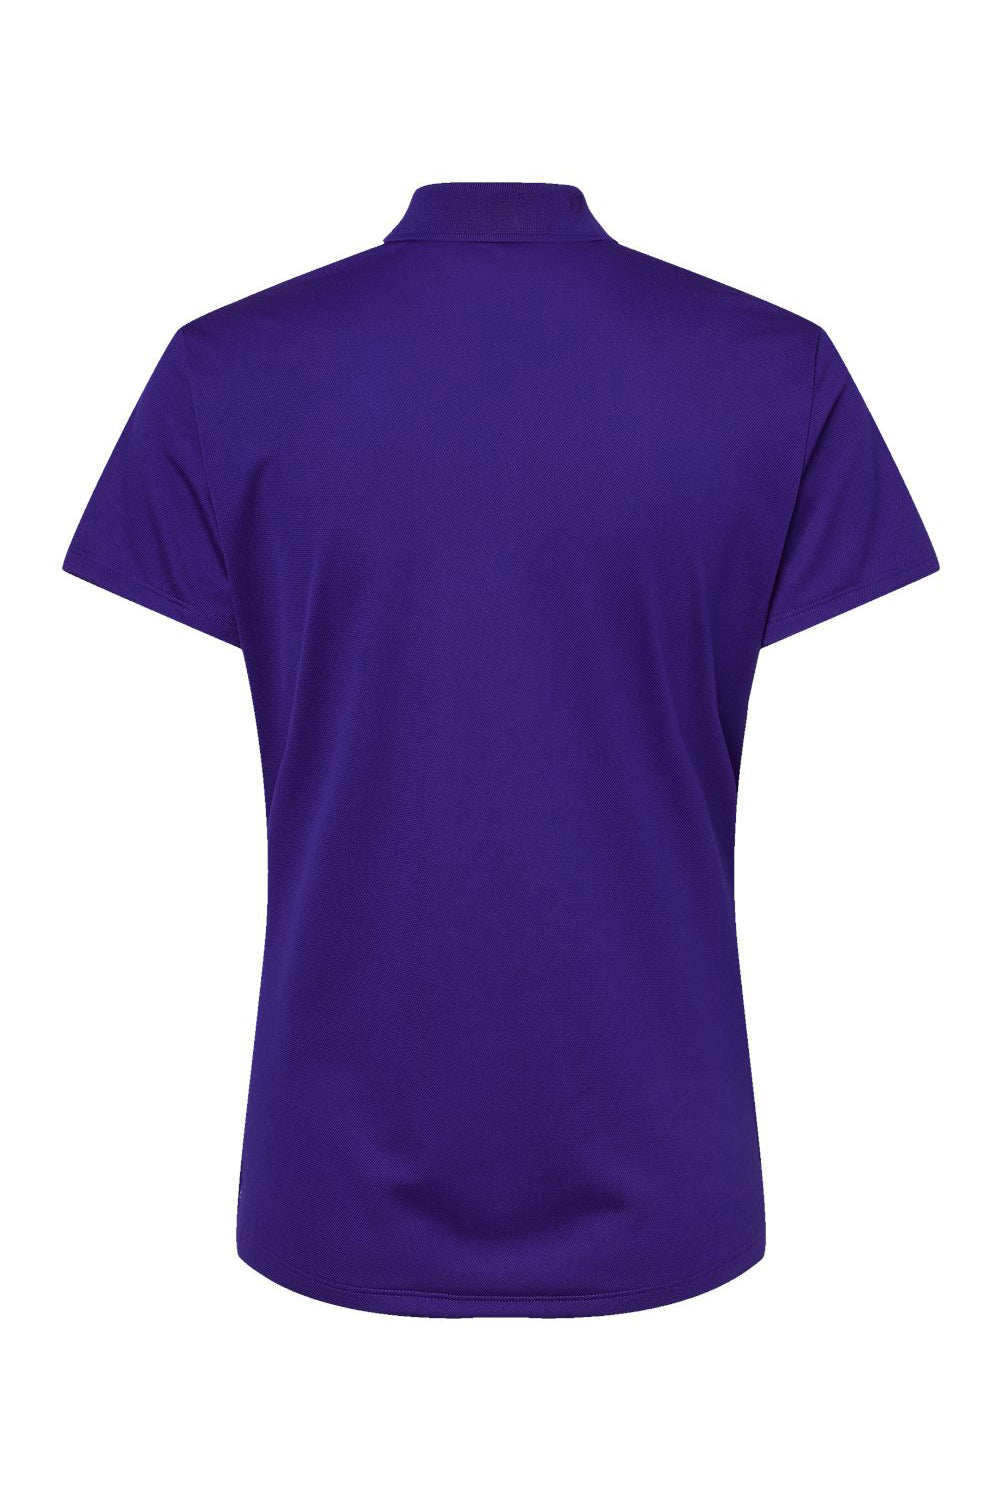 Adidas A431 Womens Basic Short Sleeve Polo Shirt Collegiate Purple Flat Back